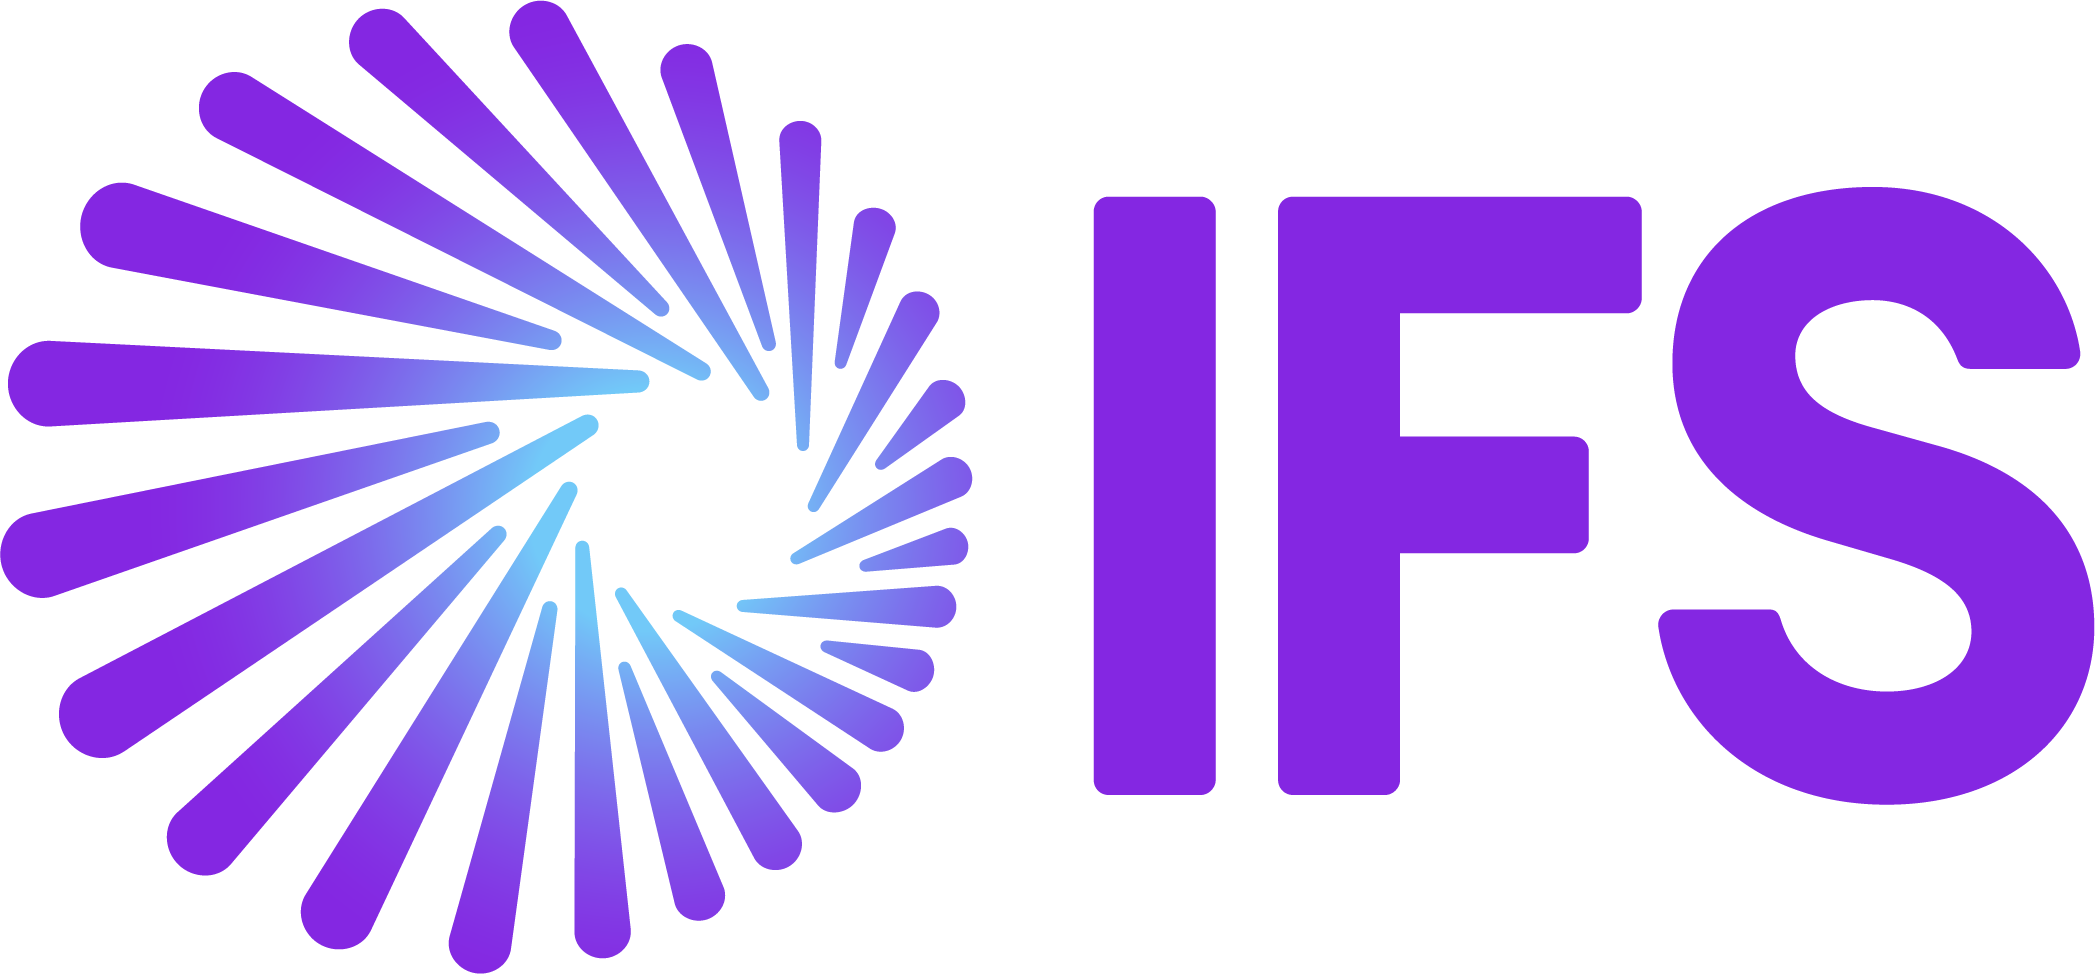 IFS_logo_2021-1